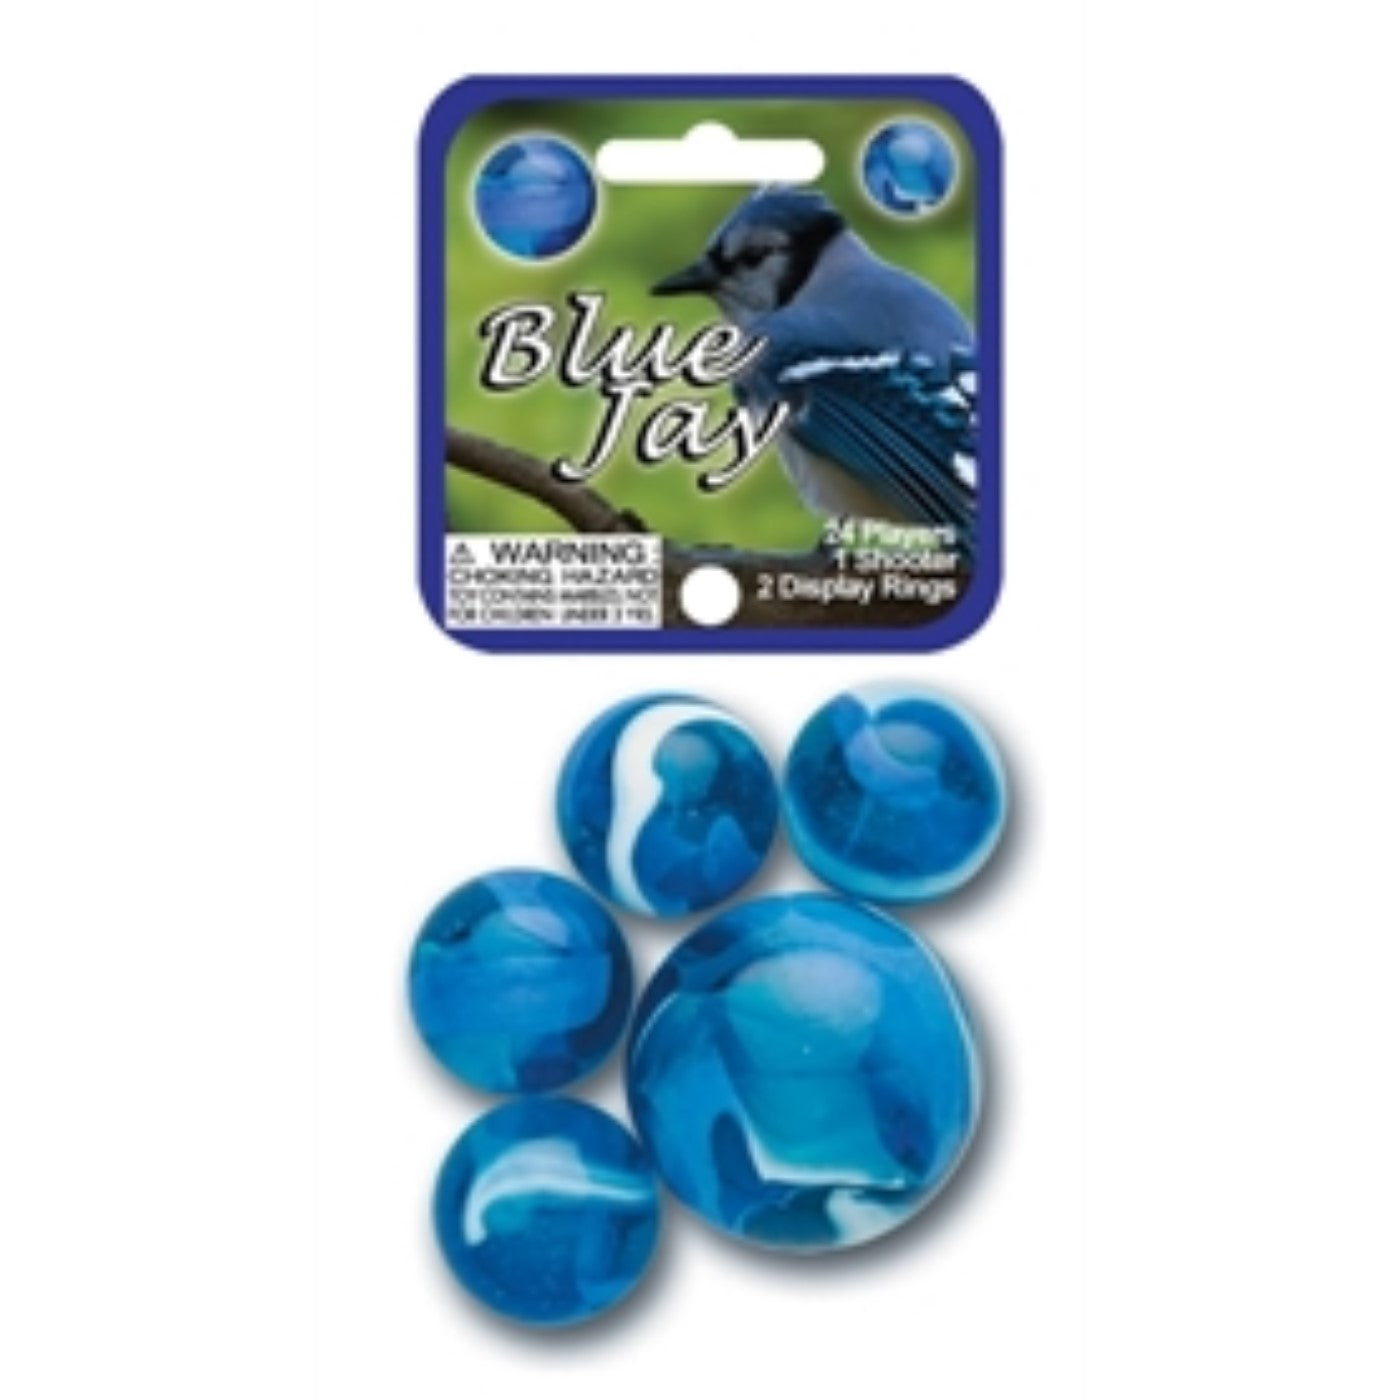 Billes - Blue jay